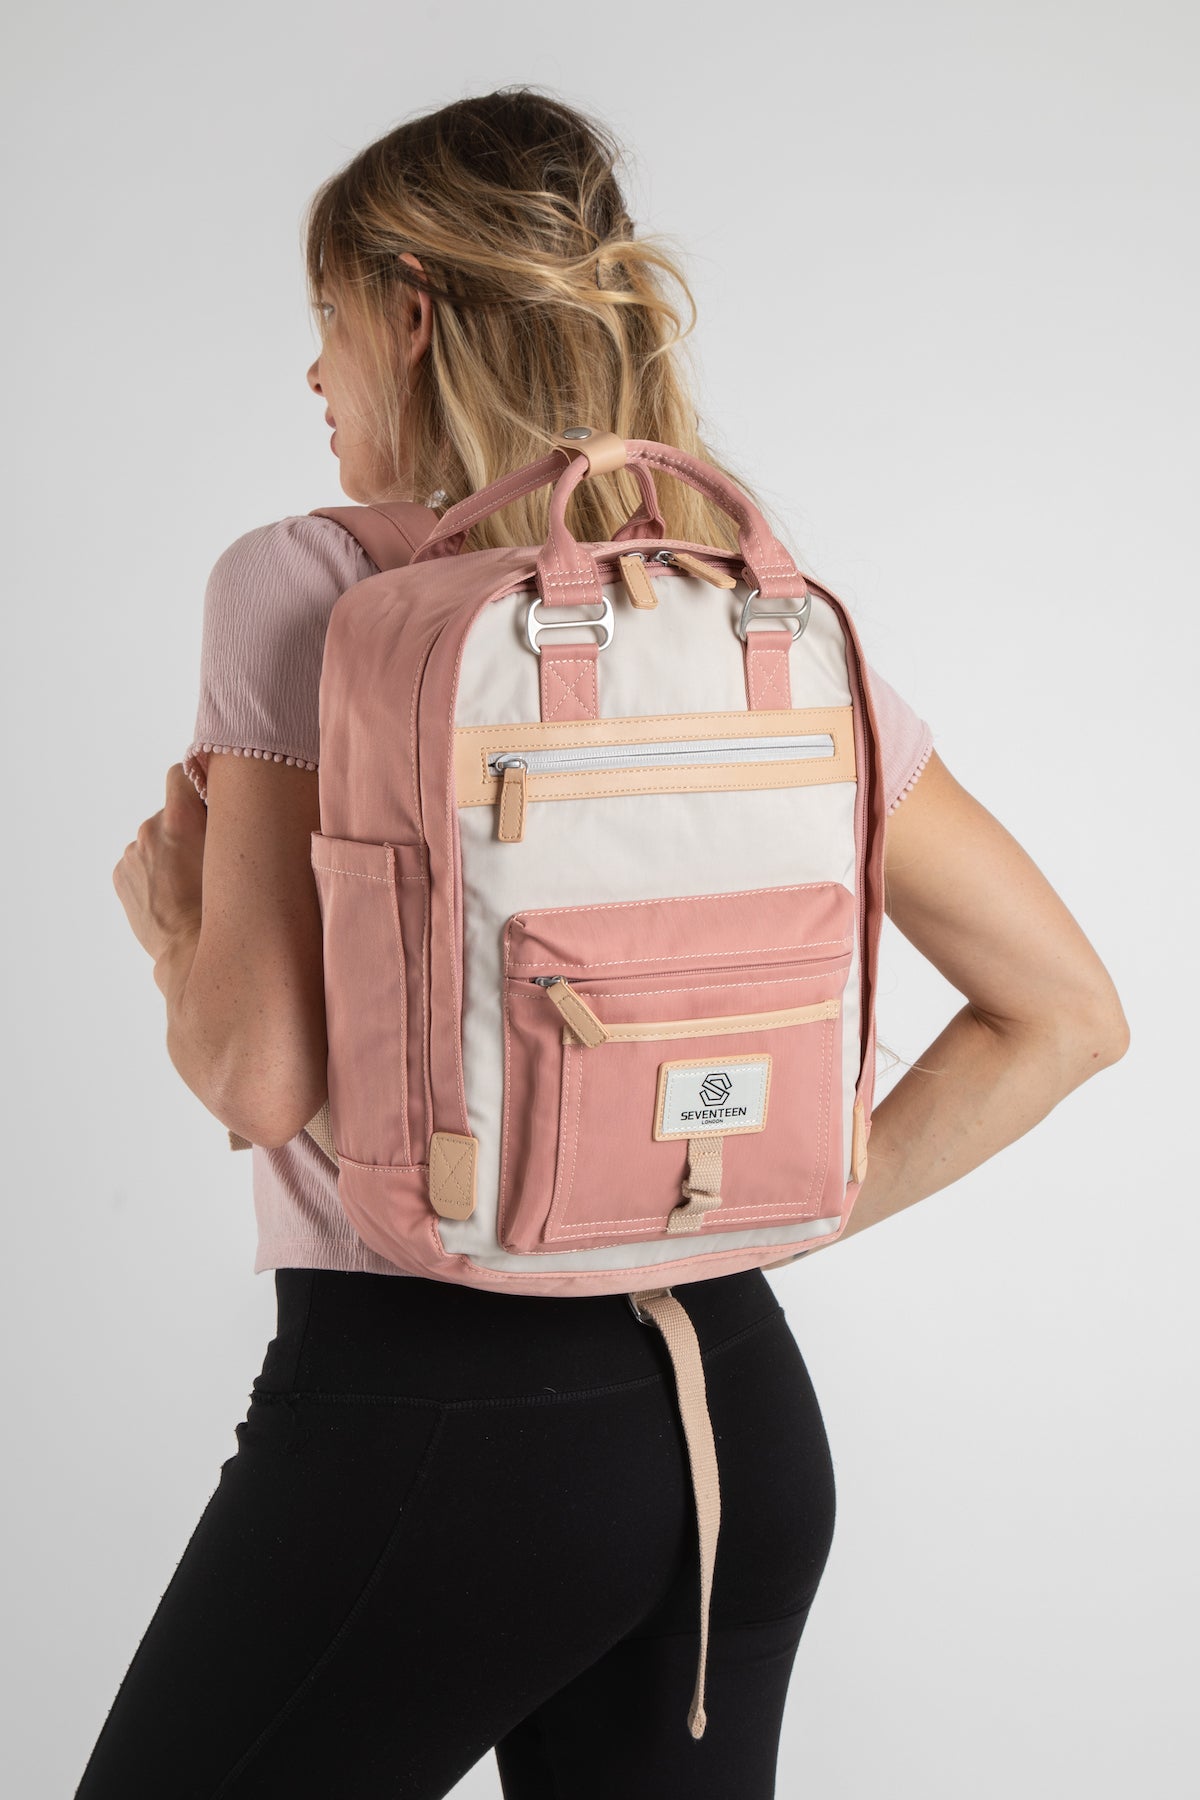 Wimbledon Backpack - Cream with Pink - Seventeen London